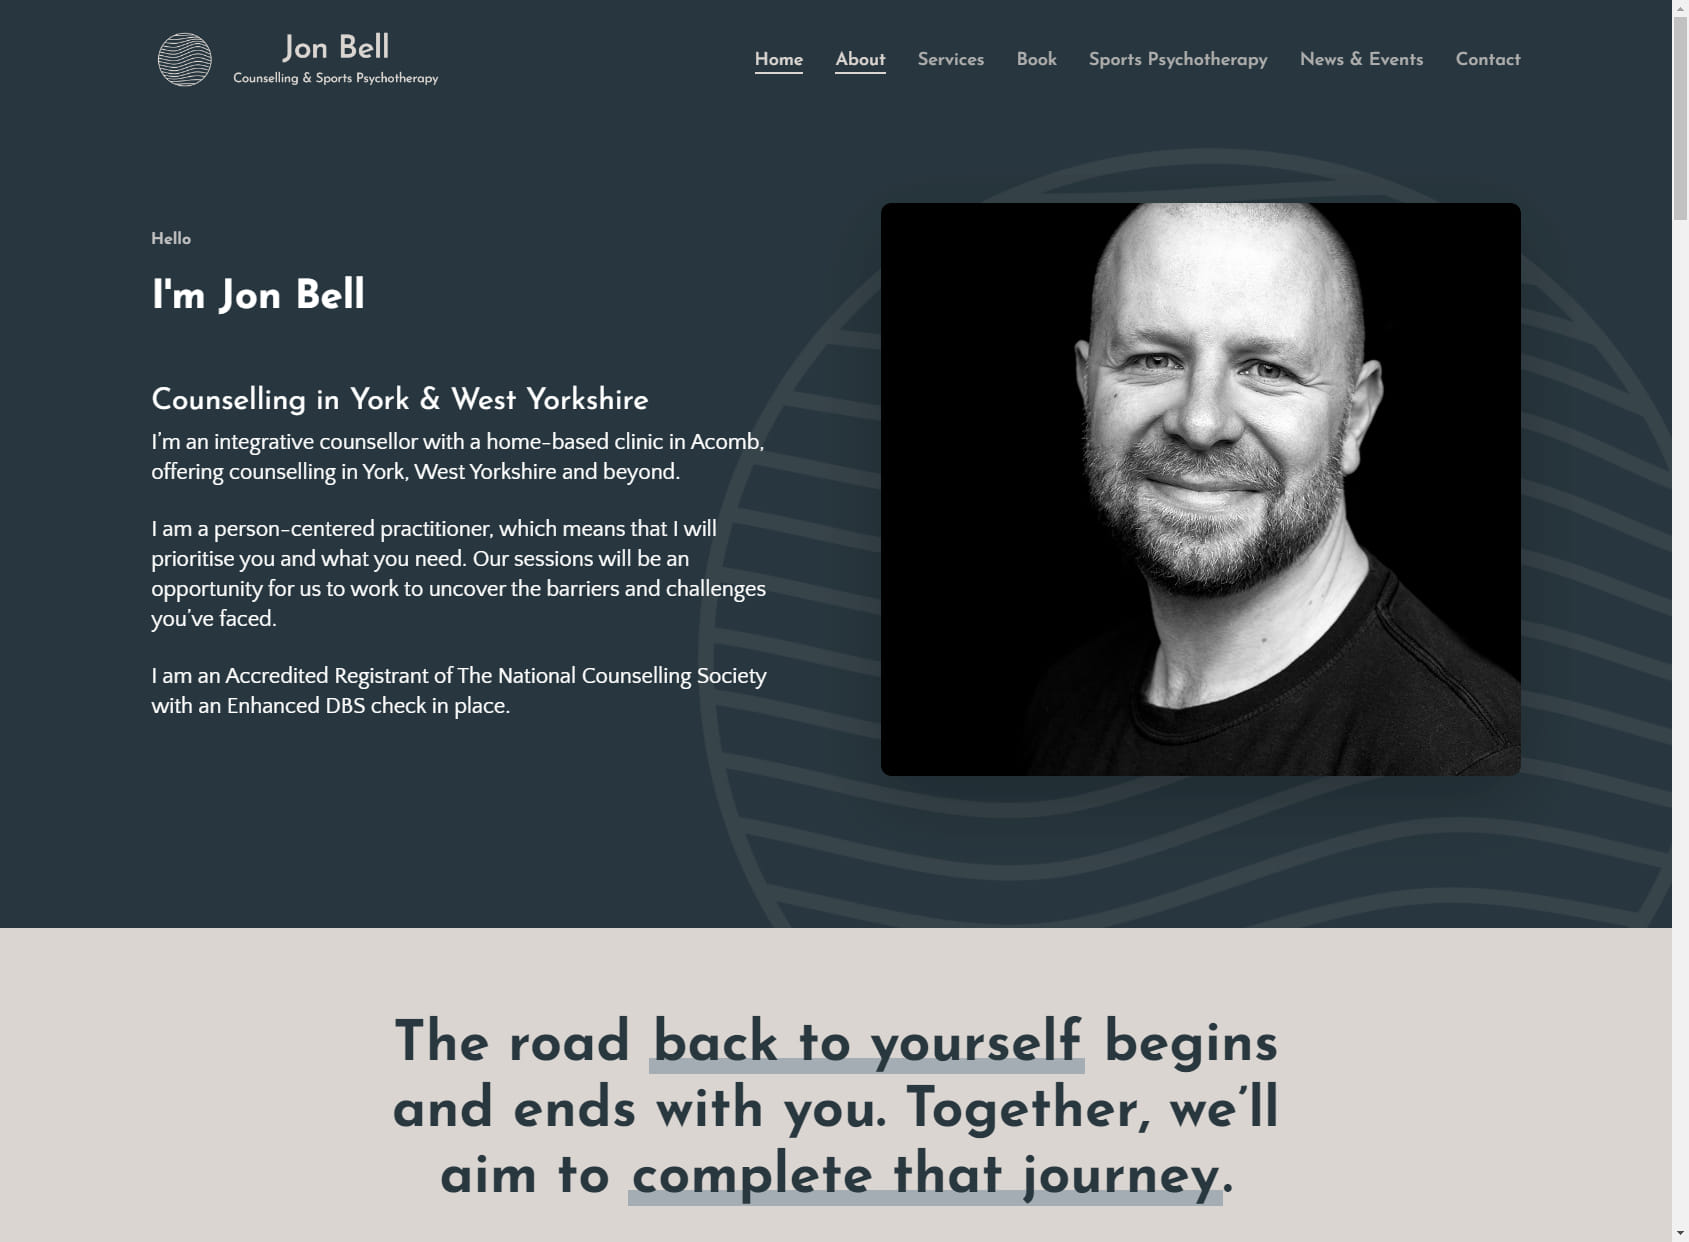 Jon Bell Counselling